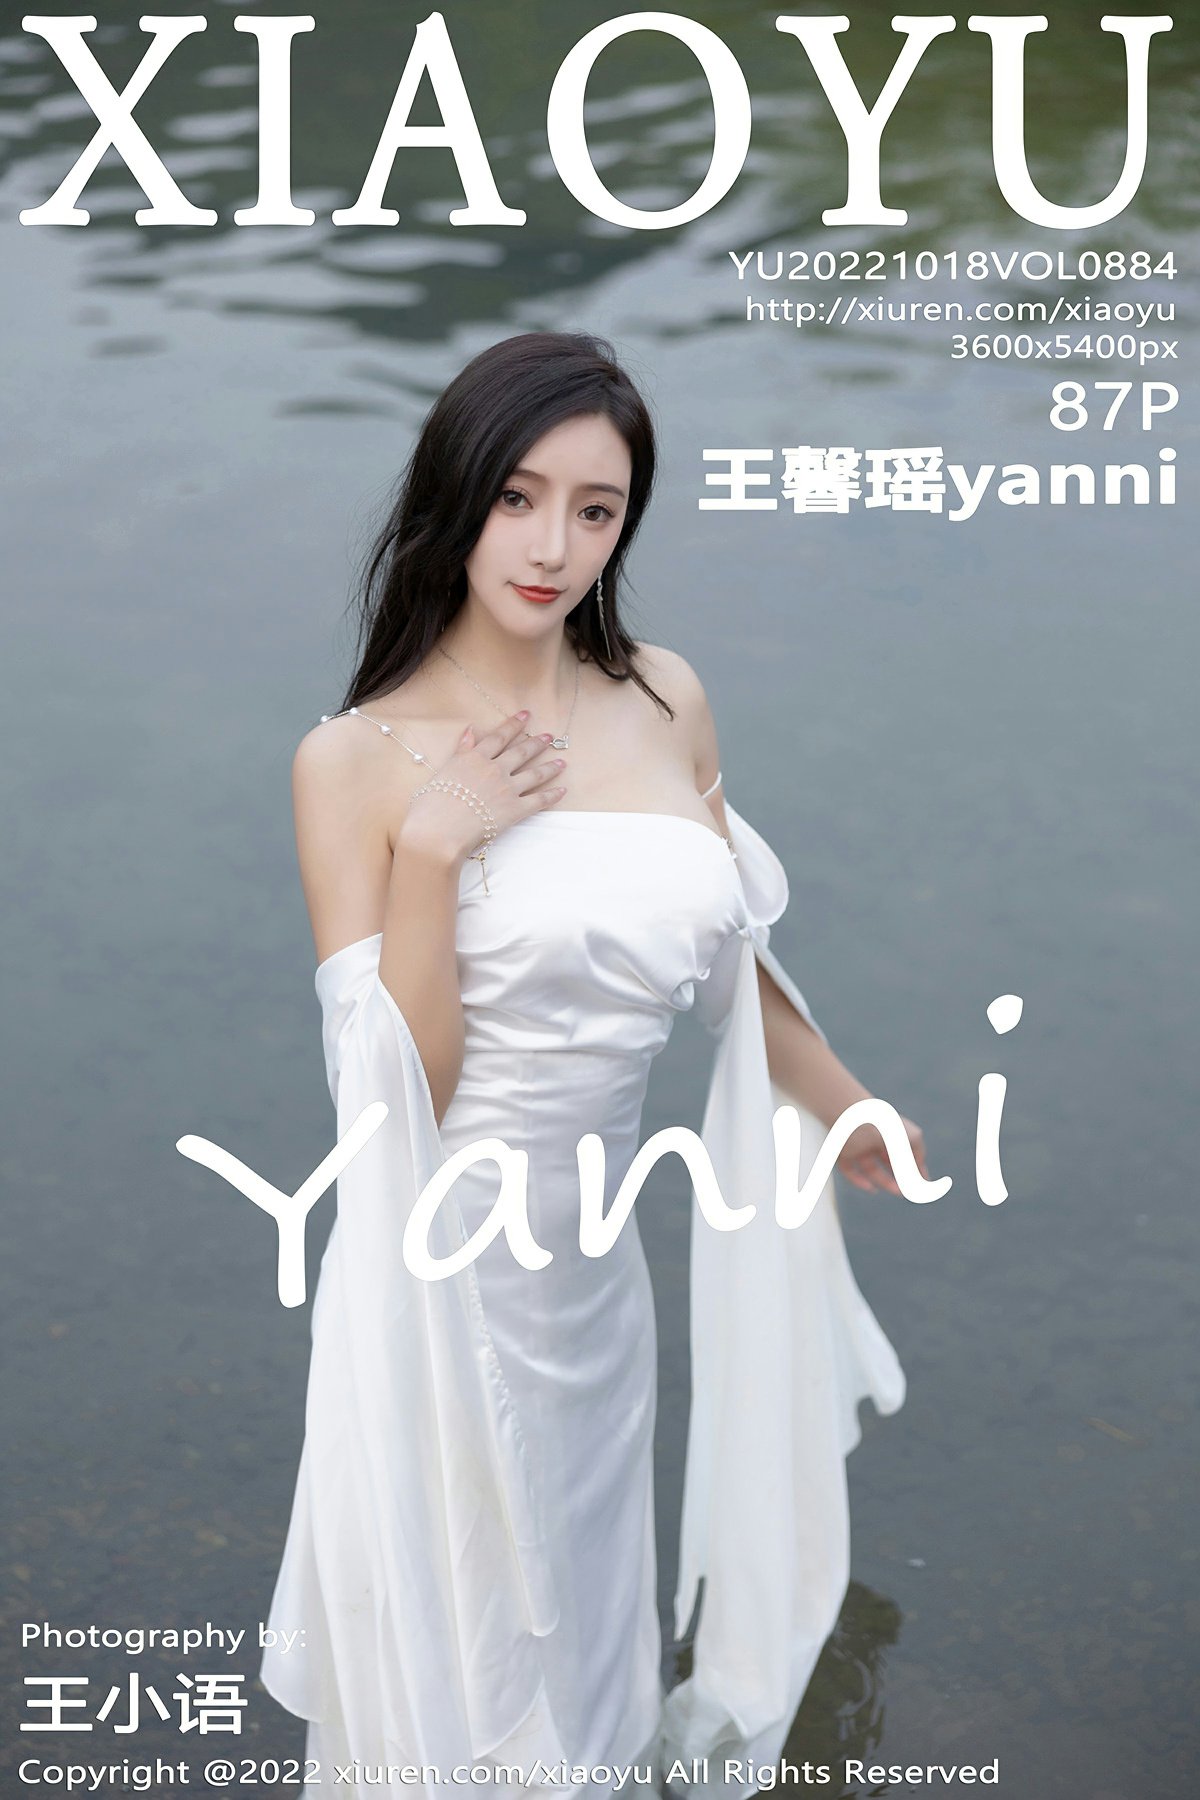 [XIAOYU语画界] VOL.884 王馨瑶yanni1 